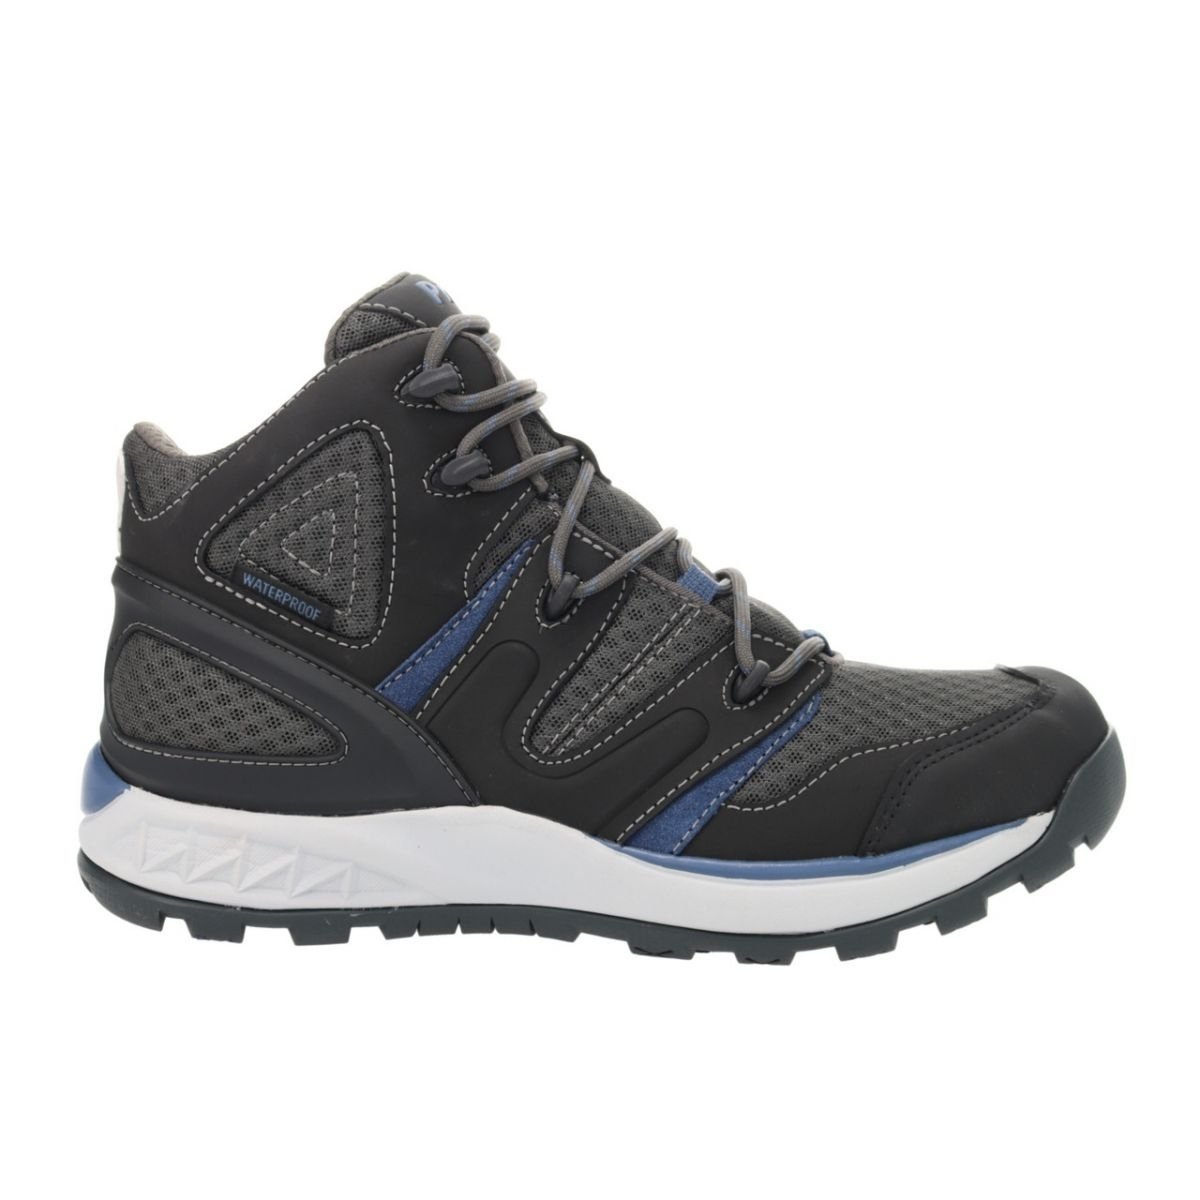 Propet Men's Veymont Waterproof Hiking Boot Grey/Blue - MOA022SGRB GREY/BLUE - GREY/BLUE, 9.5 X-Wide